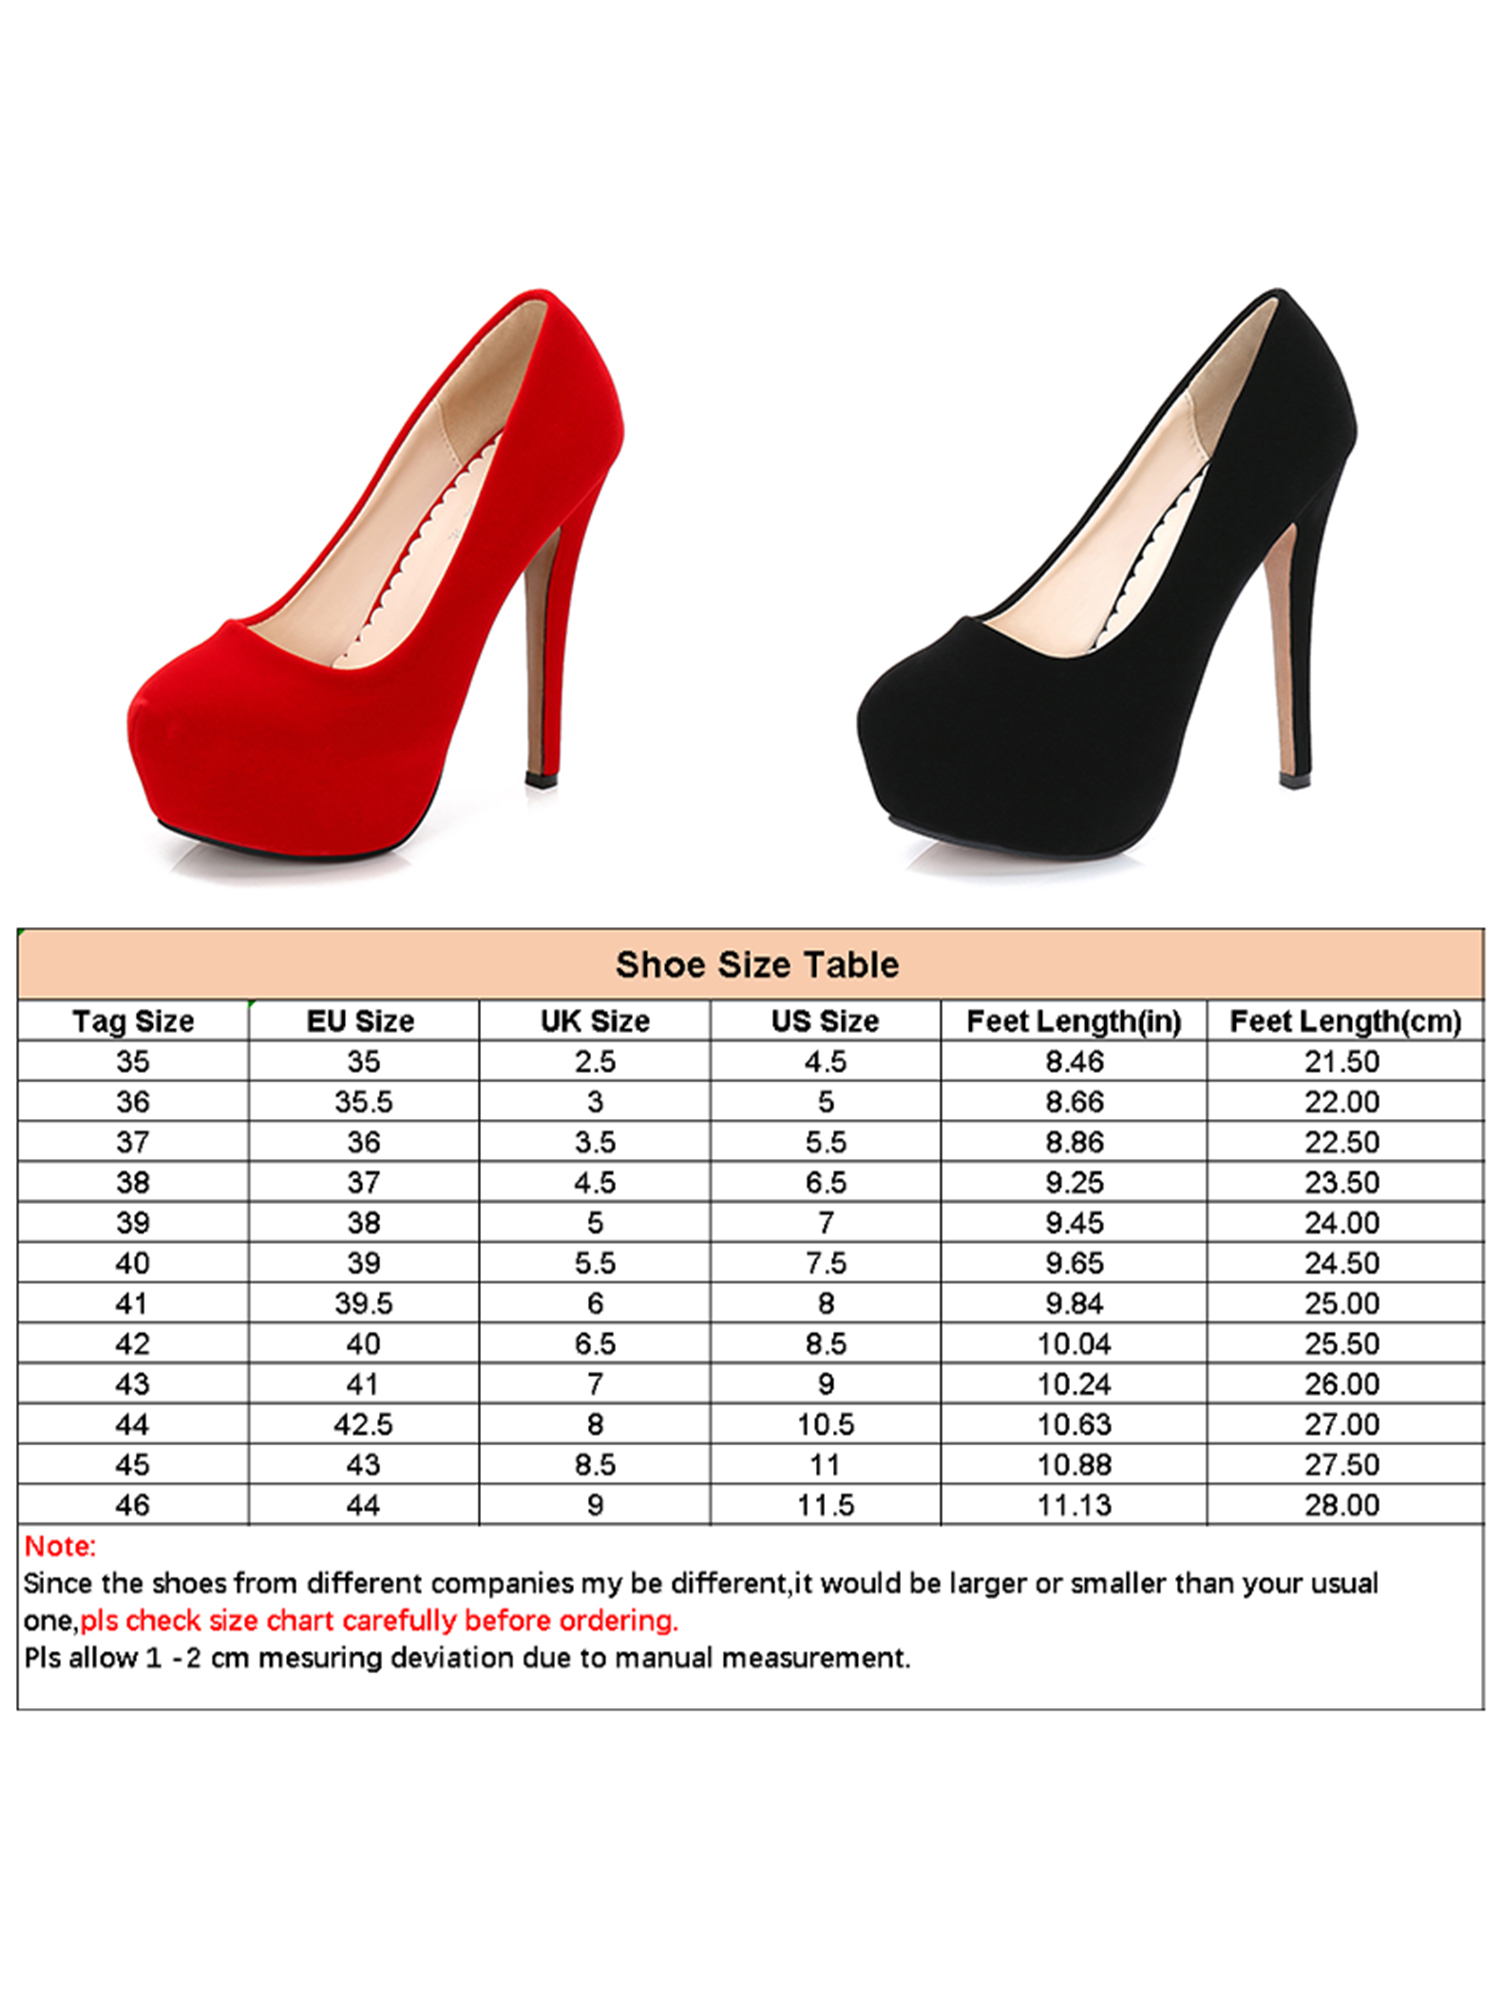 Daeful Women Lightweight High Heel Platform Pump Wedding Stiletto Heels Walking Fashion Dress Shoes Red (14cm) 11 - image 2 of 9